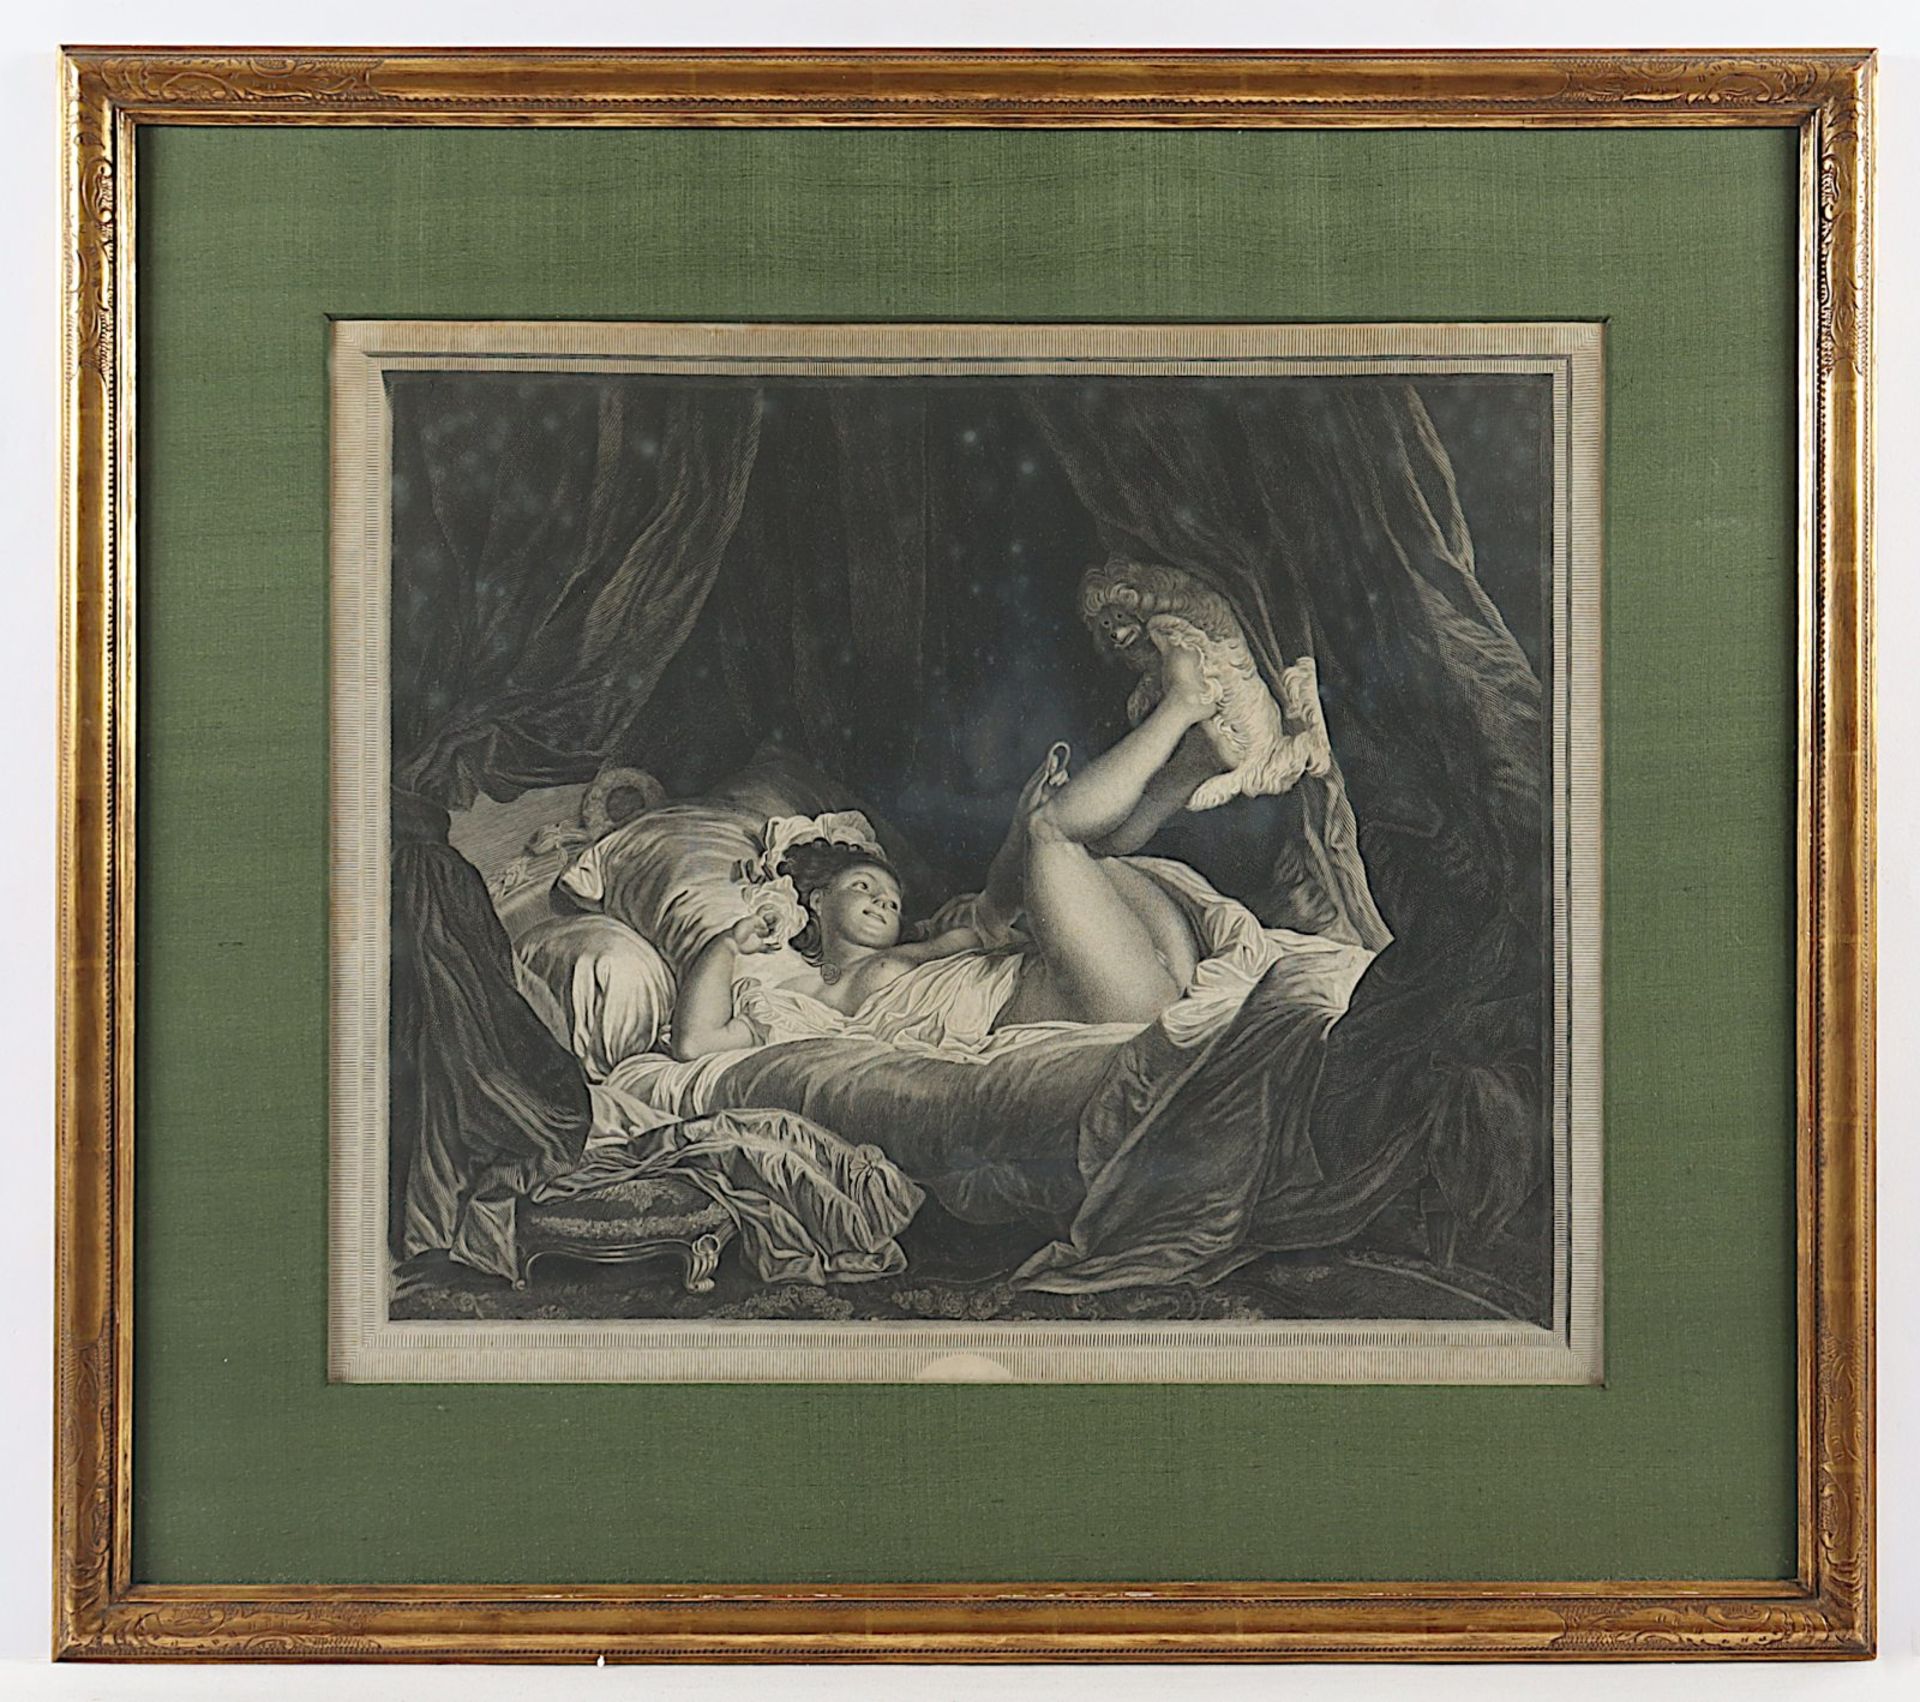 FRAGONARD, Jean-Honoré de (1732-1806), nach, "La gimlette", Kupferstich von Charles Bertoni, 18.Jh.